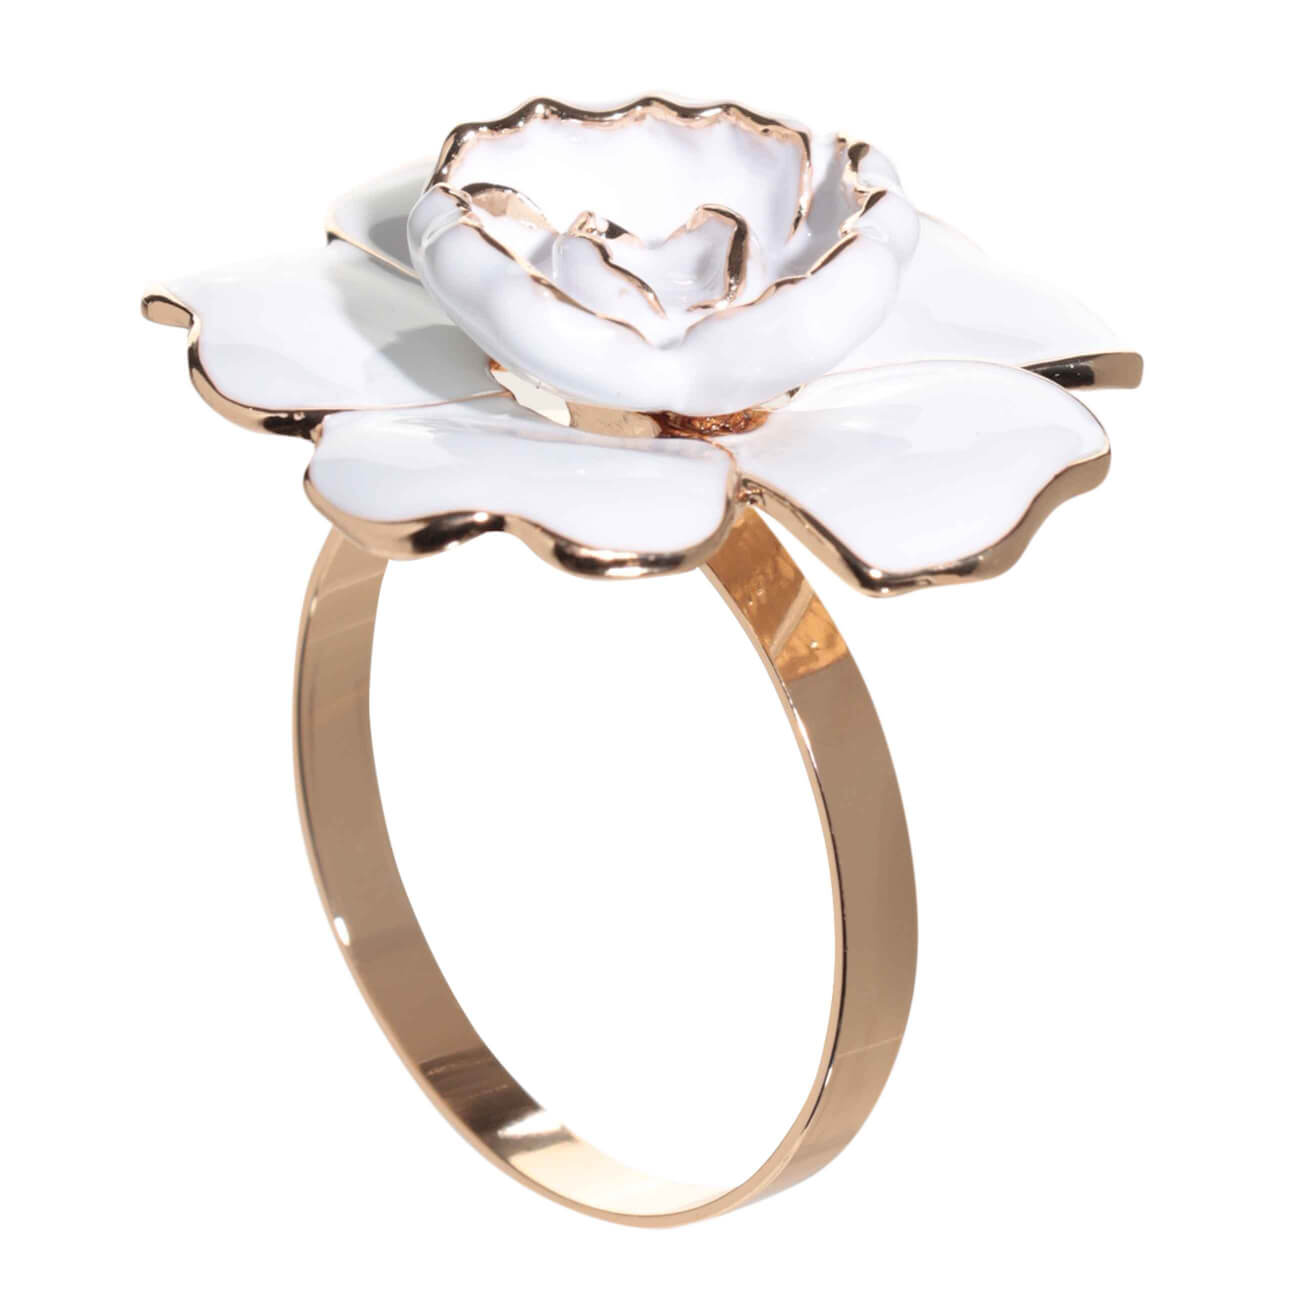 Napkin ring, 5 cm, metal, white and gold, Magnolia flower, Magnolia изображение № 1